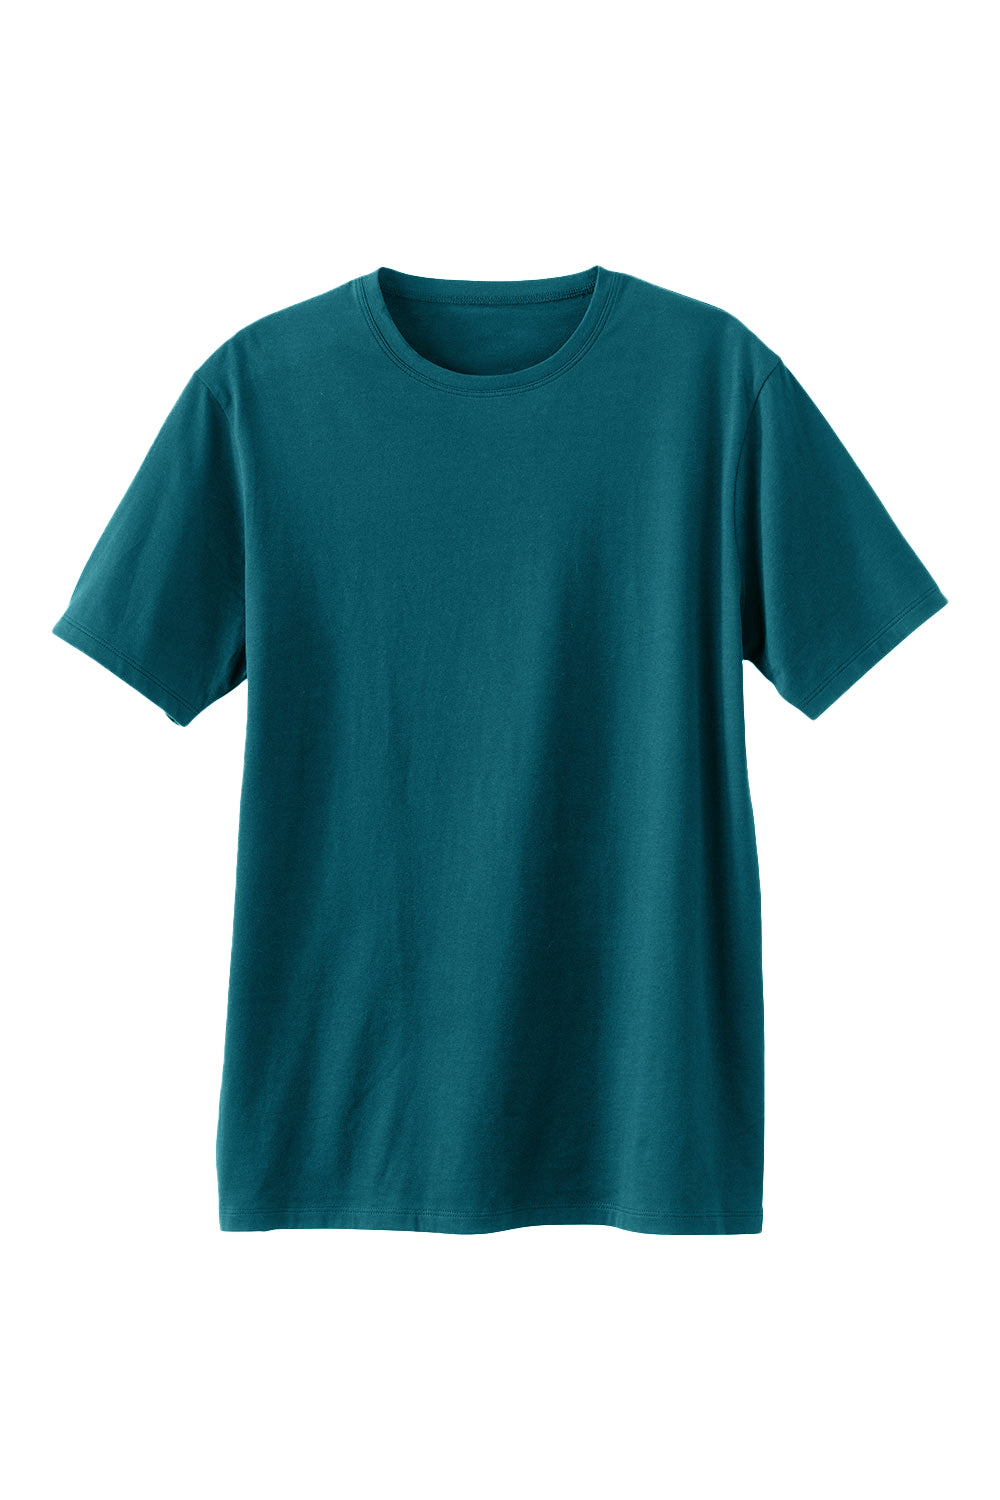 Check styling ideas for「Uniqlo U 100% Cotton Crew Neck T-Shirt